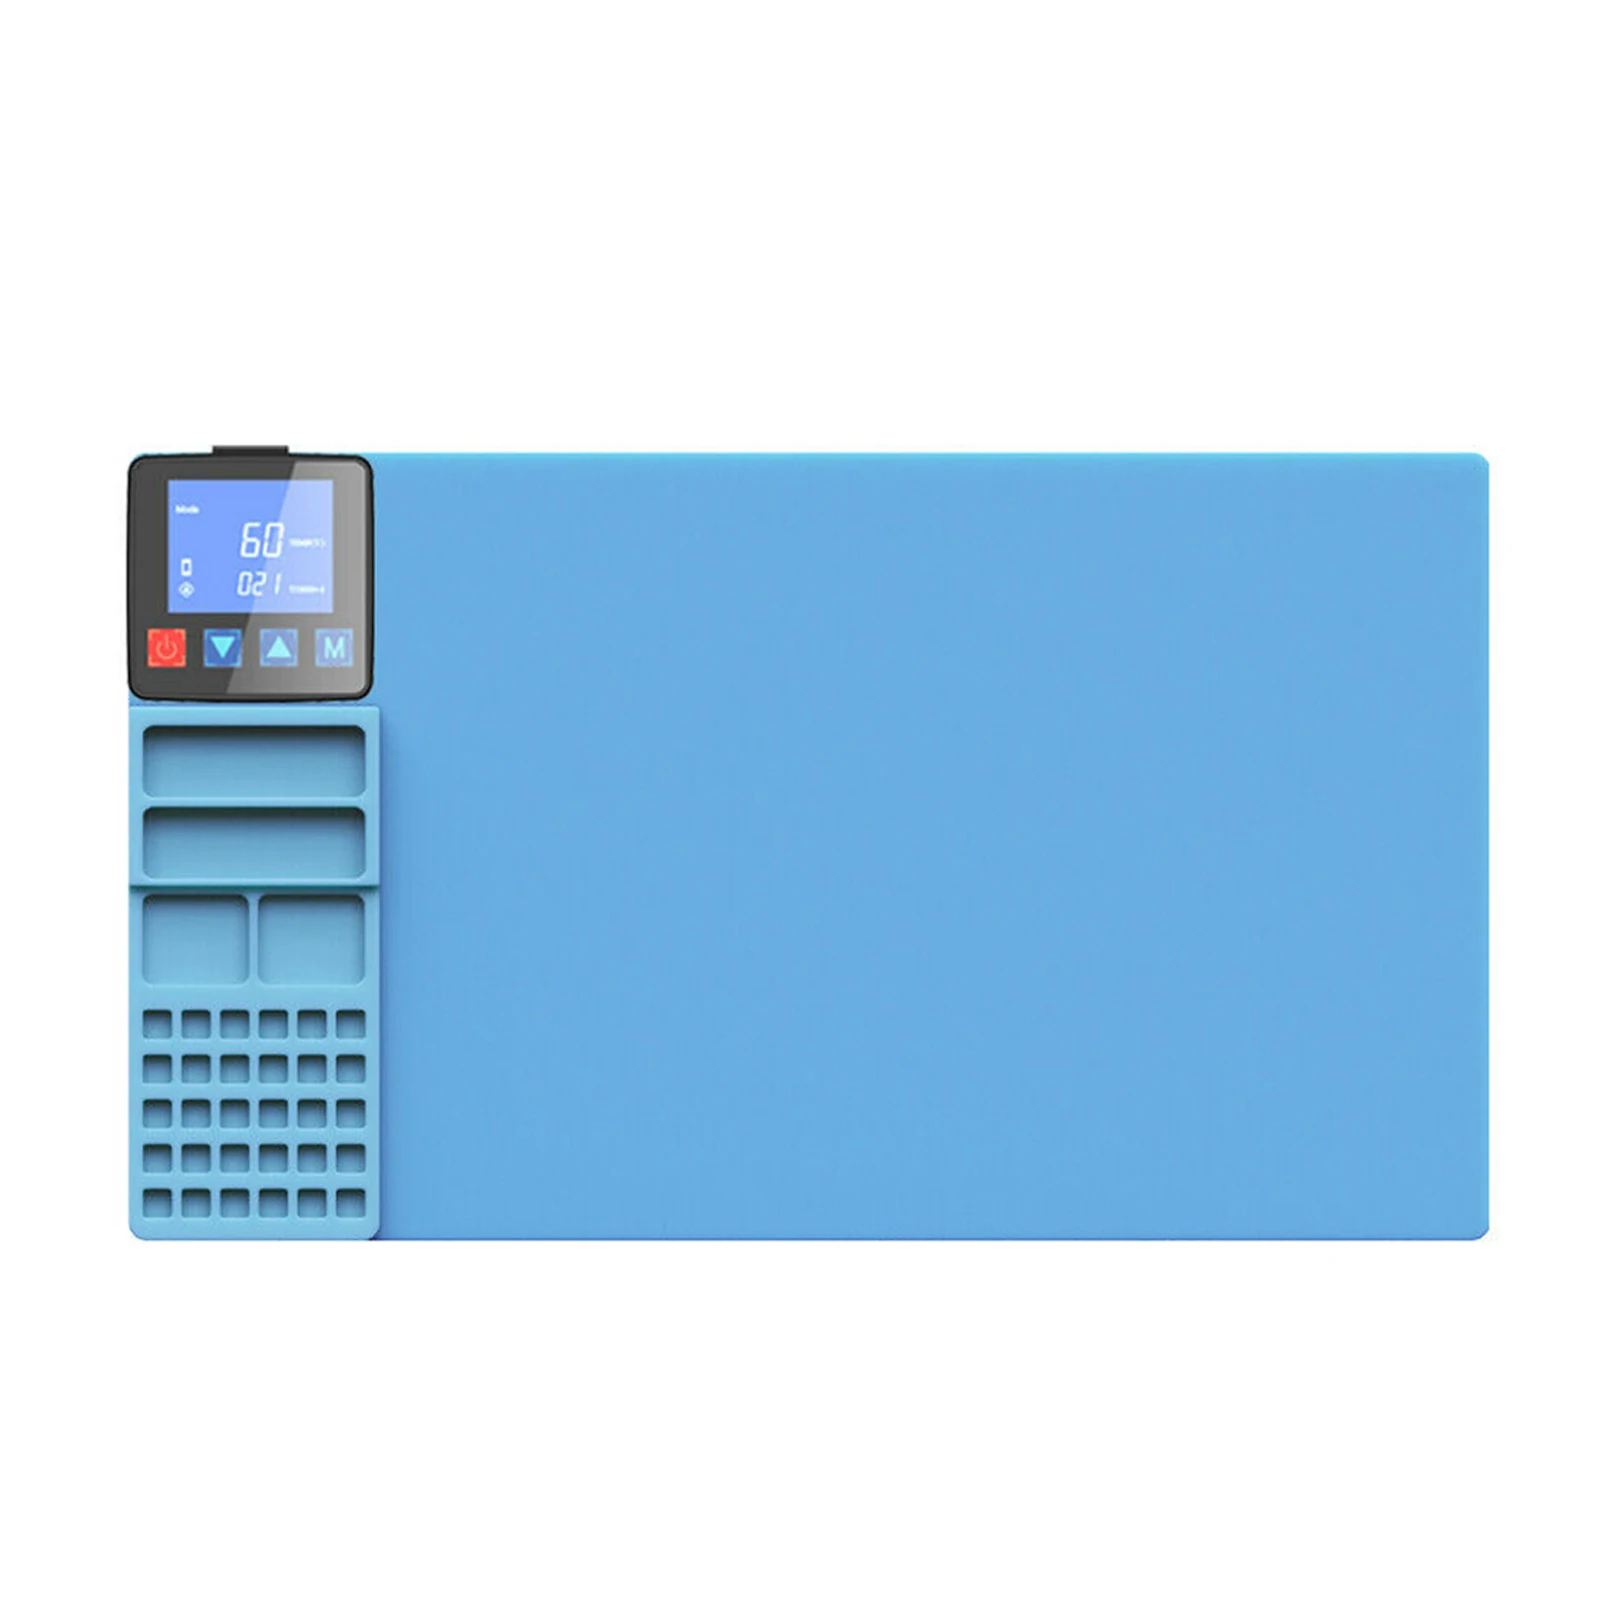 Repair Tool Fast Open Mobile Phone Efficient Refurbish LCD Screen Separator Universal Safe forCPB Heating Pad Plate forIPad